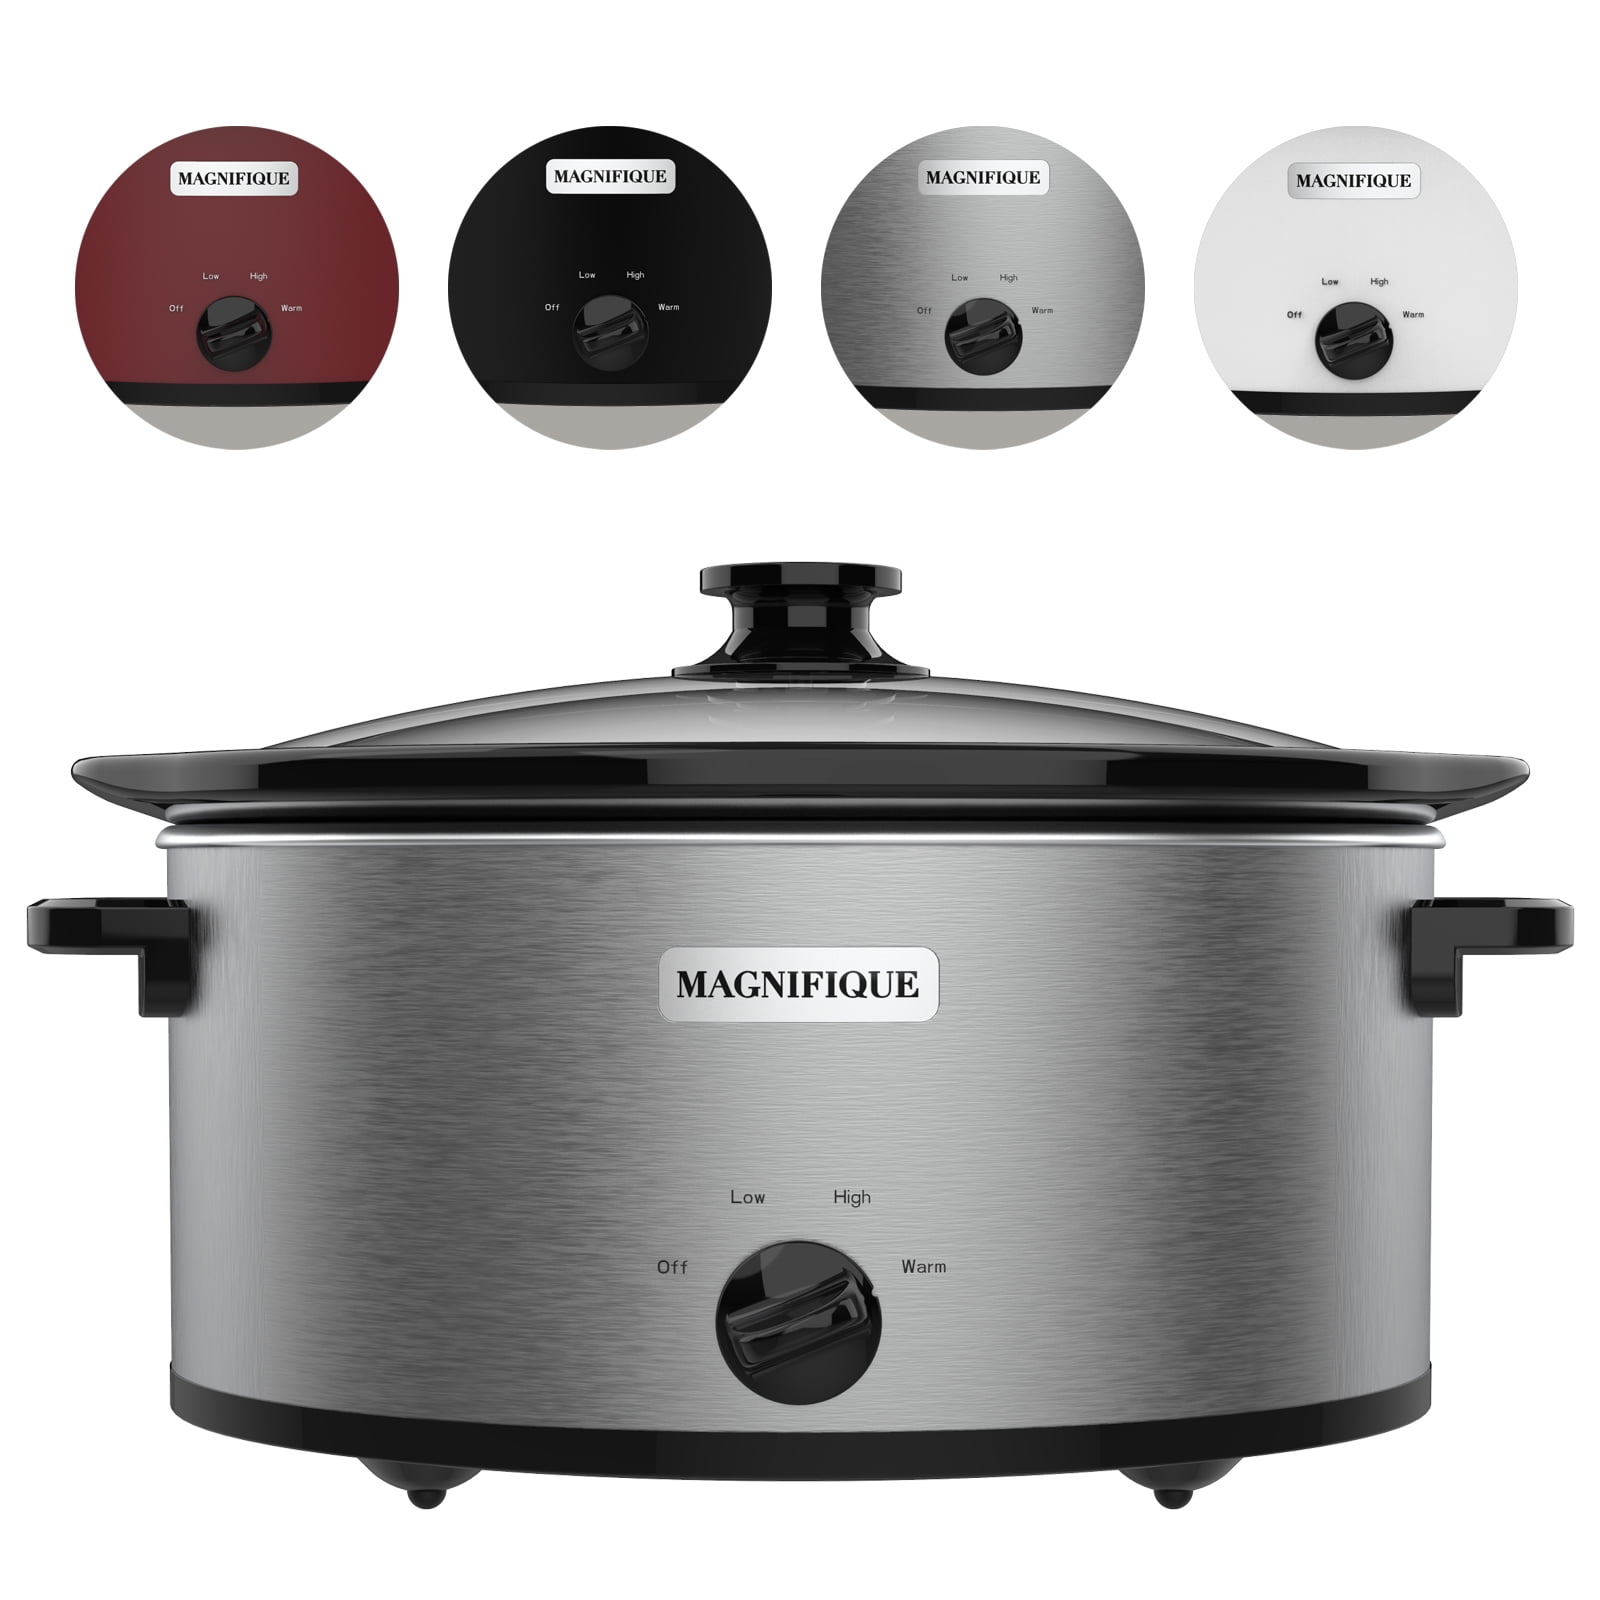 Superjoe Dual Pot Slow Cooker Buffet Server Stainless Steel Crock Pot Food Warmer,2x1.25QT, Size: One size, Silver